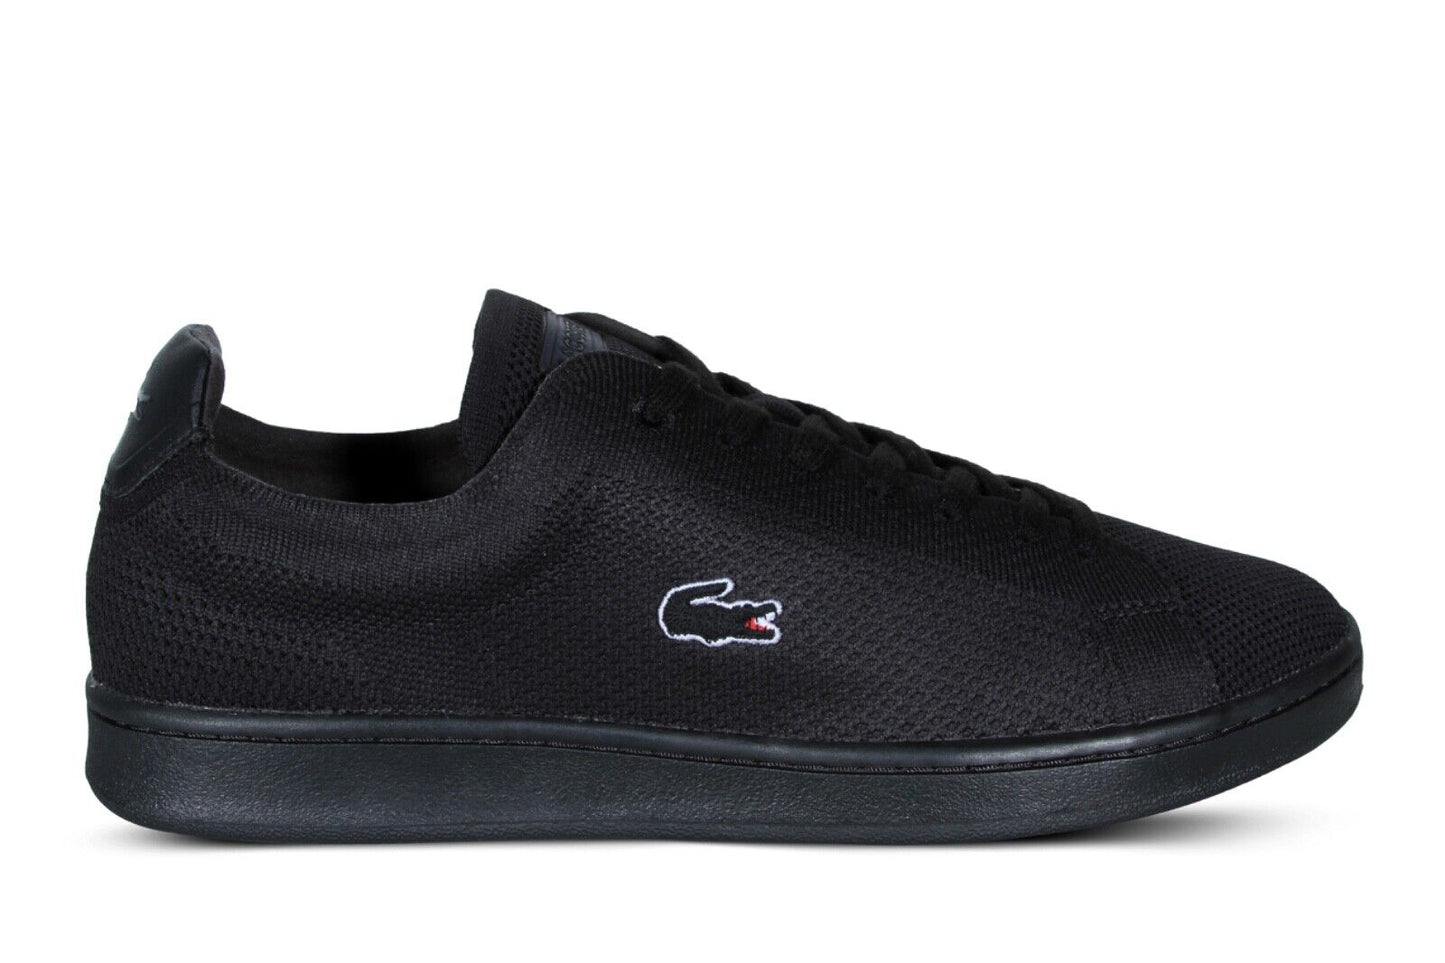 Lacoste Carnaby Piqué 124 1 SMA Men’s Sneakers in Black 747SMA007602H